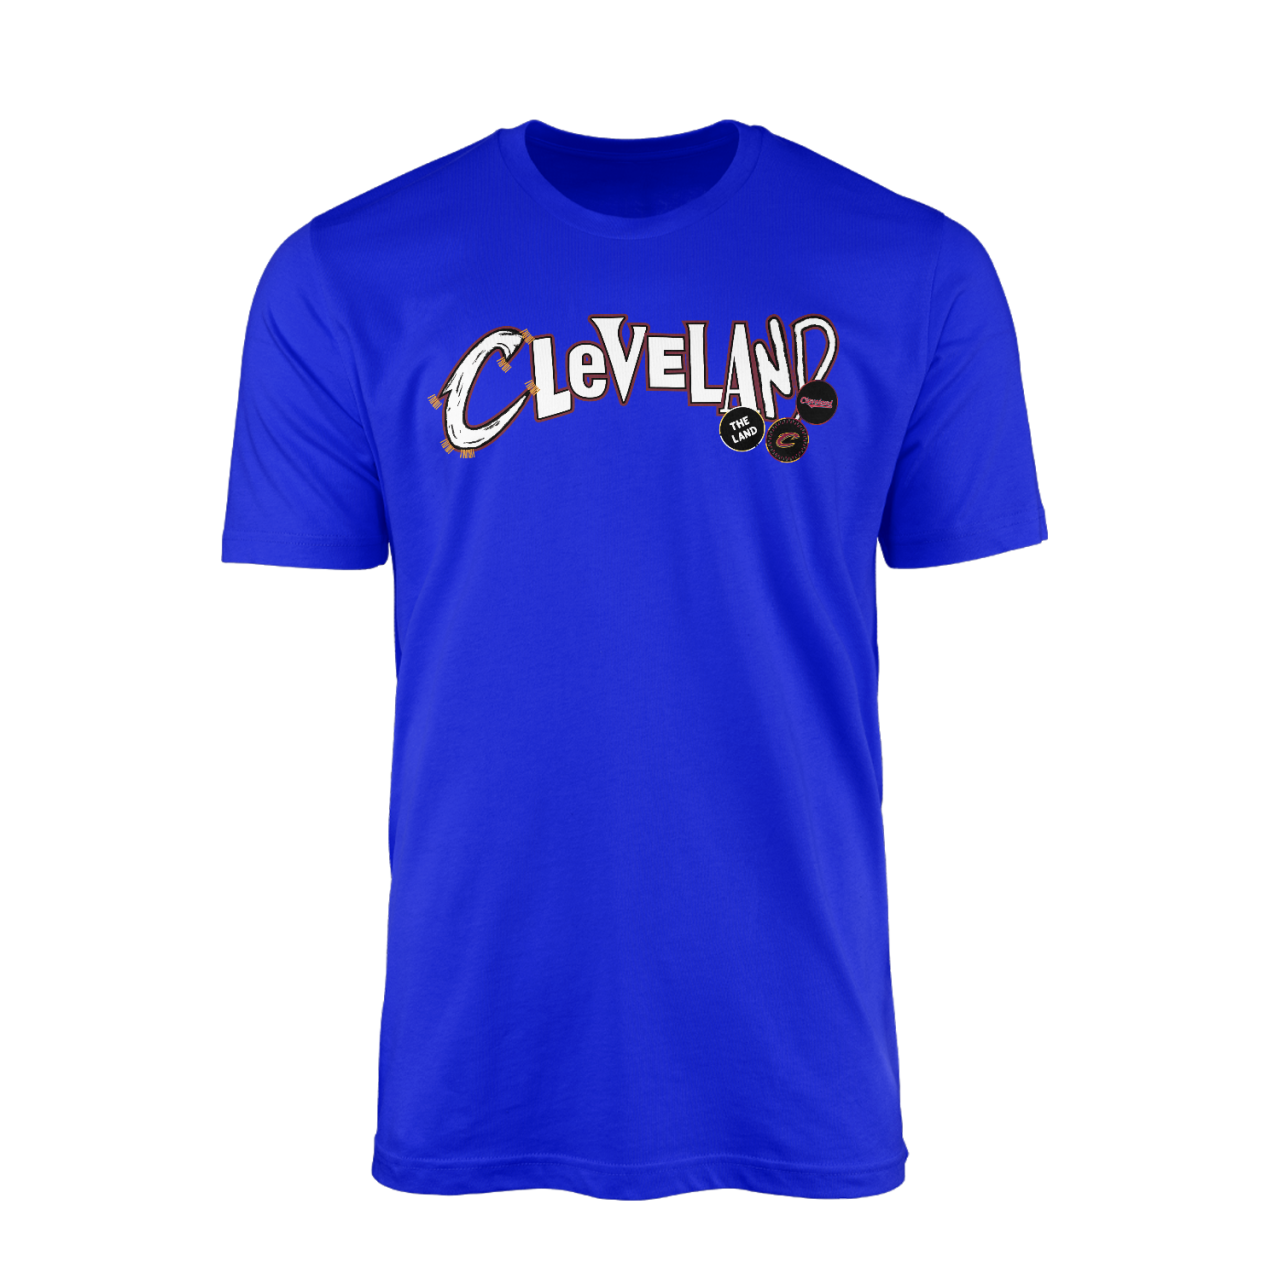 Cleveland City Edition Mavi Tshirt